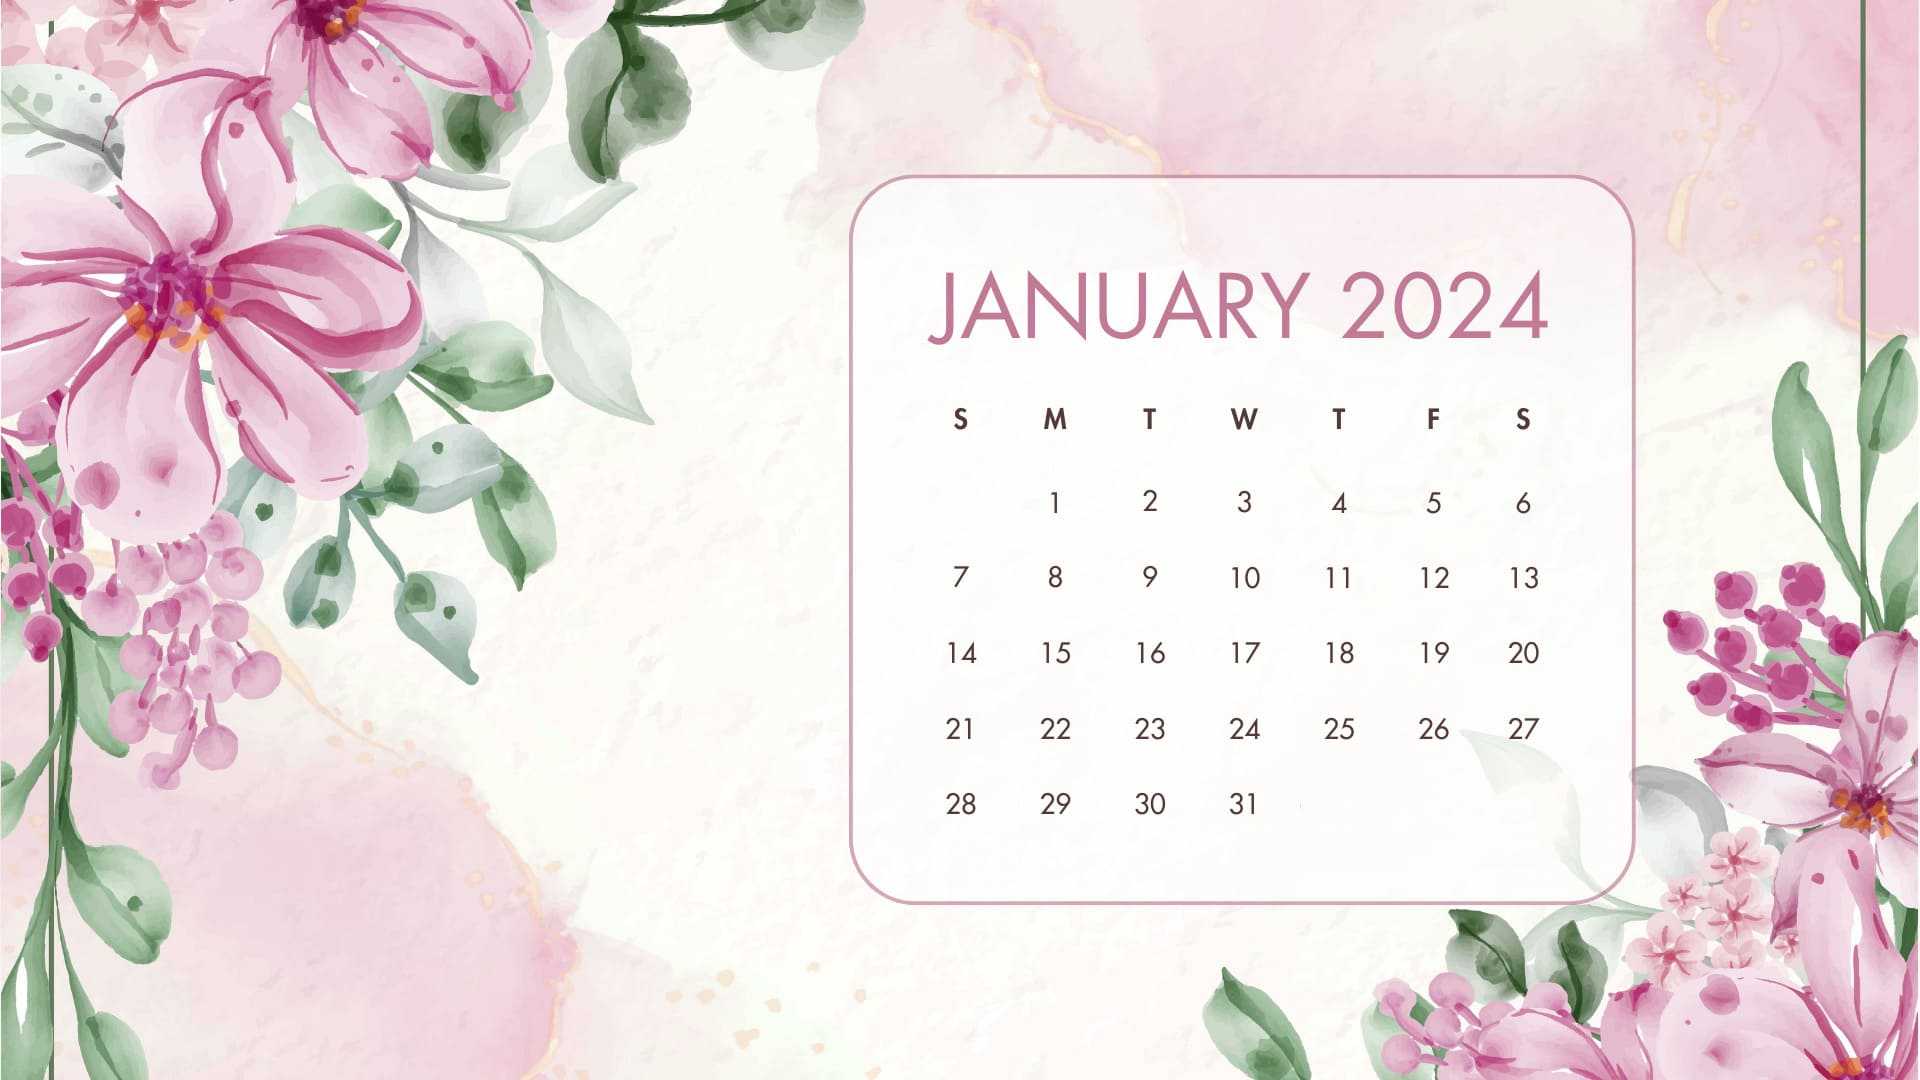 January 2024 Desktop Calendar Wallpaper 5 